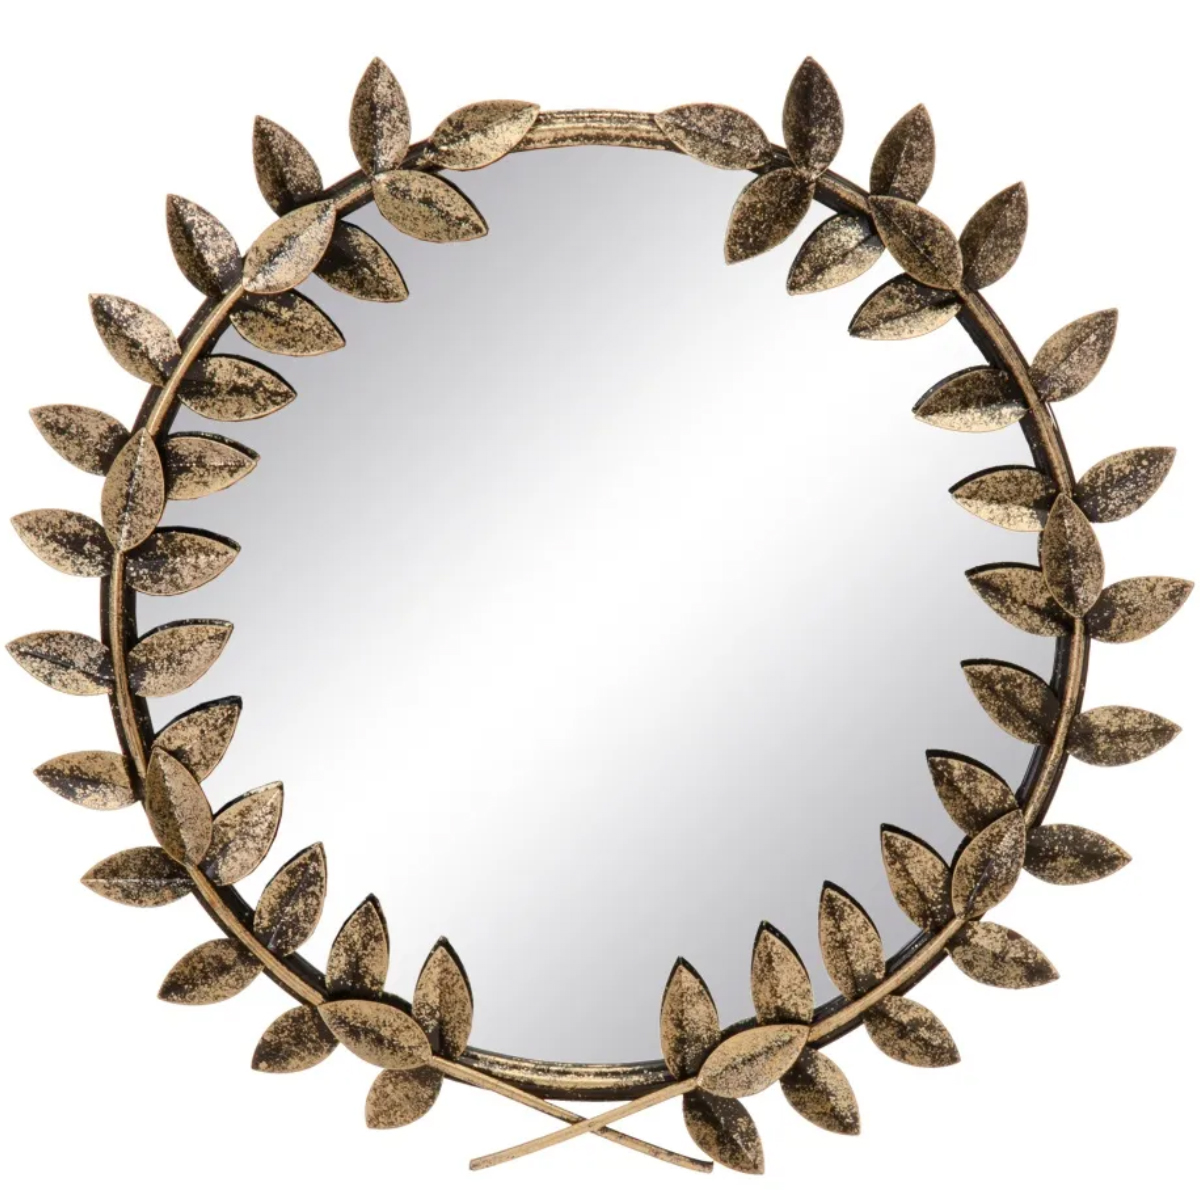 Patinated gold metal wall mirror